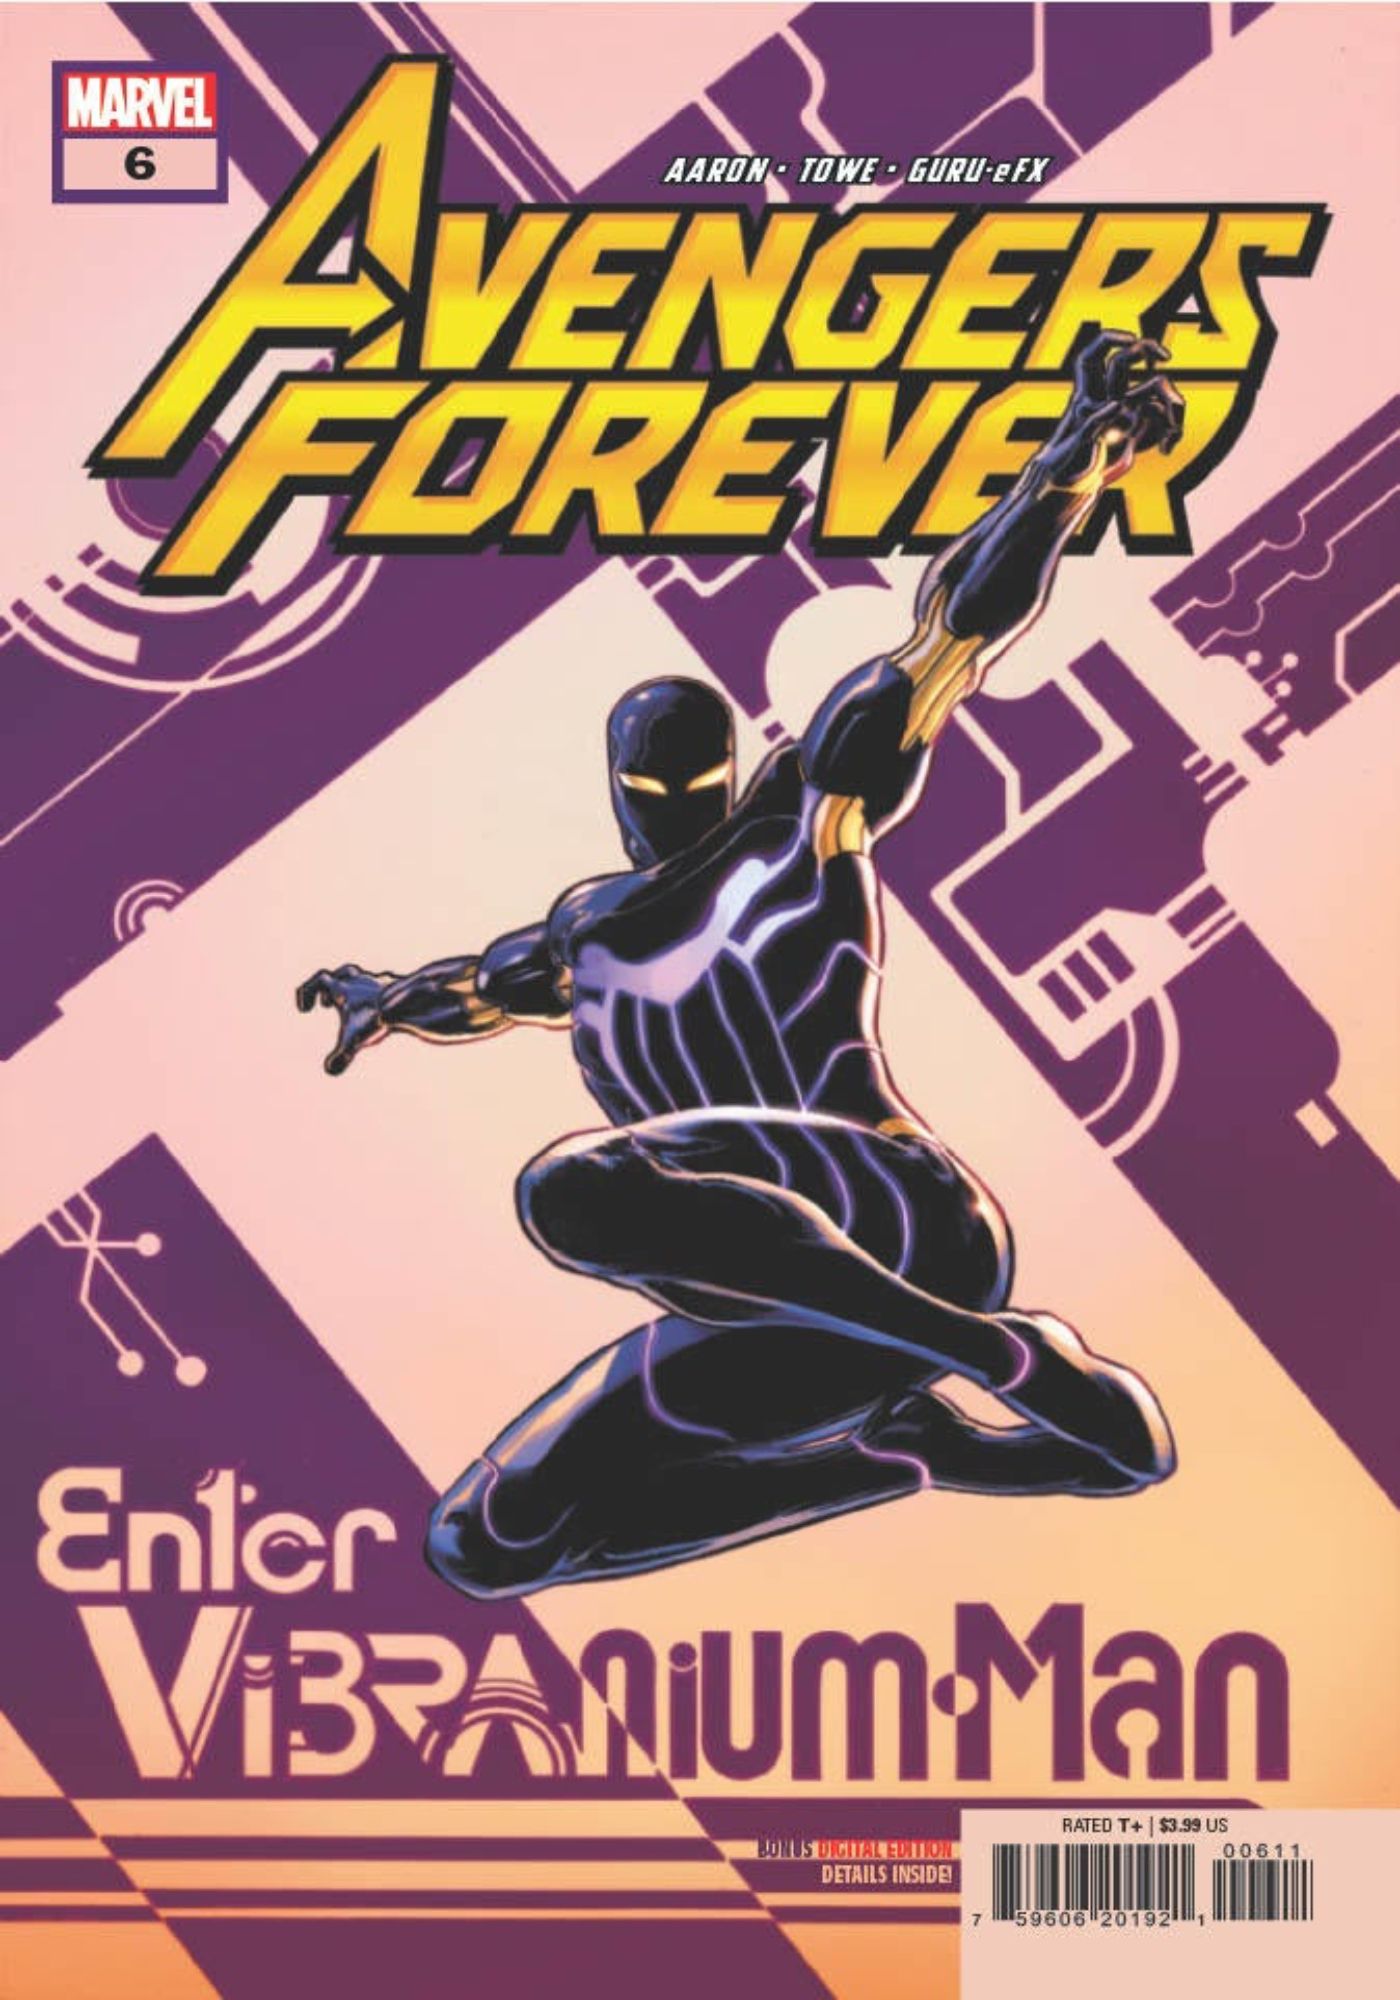 Black Panther’s New Origin Makes Him Marvel’s Superman/Spider-Man Fusion